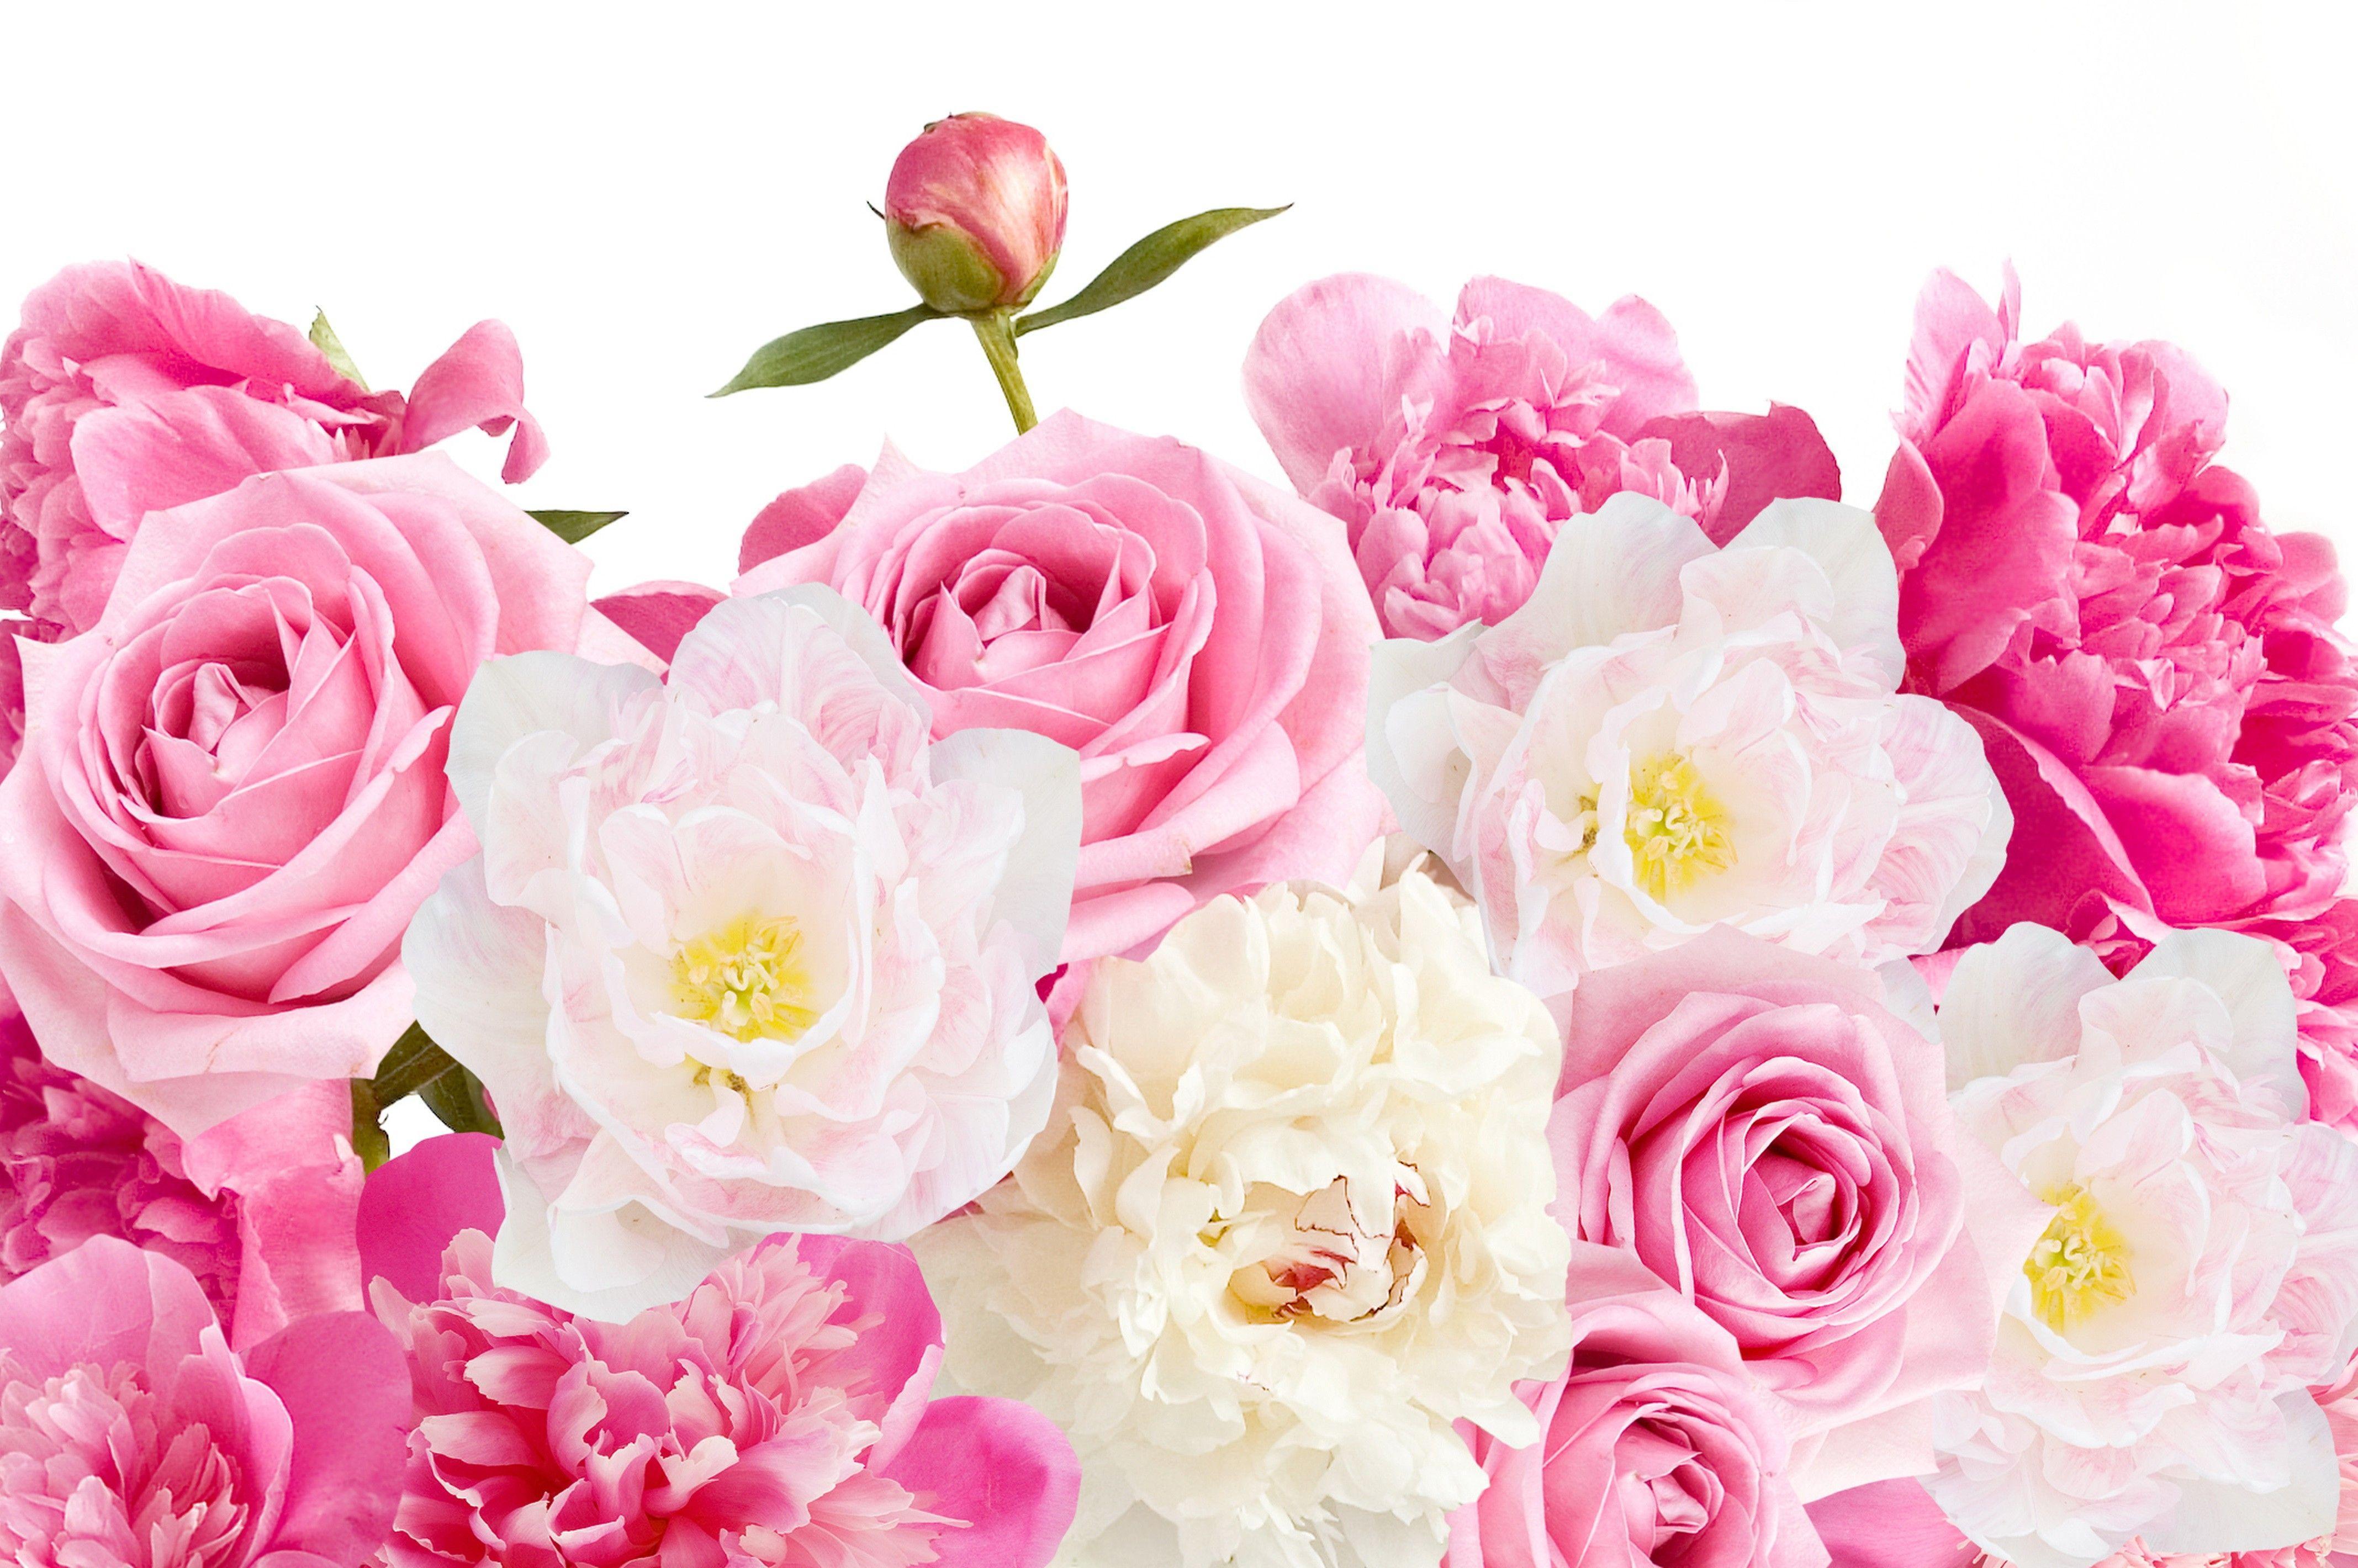 Pink Roses and Peonies 4k Ultra HD Wallpaper